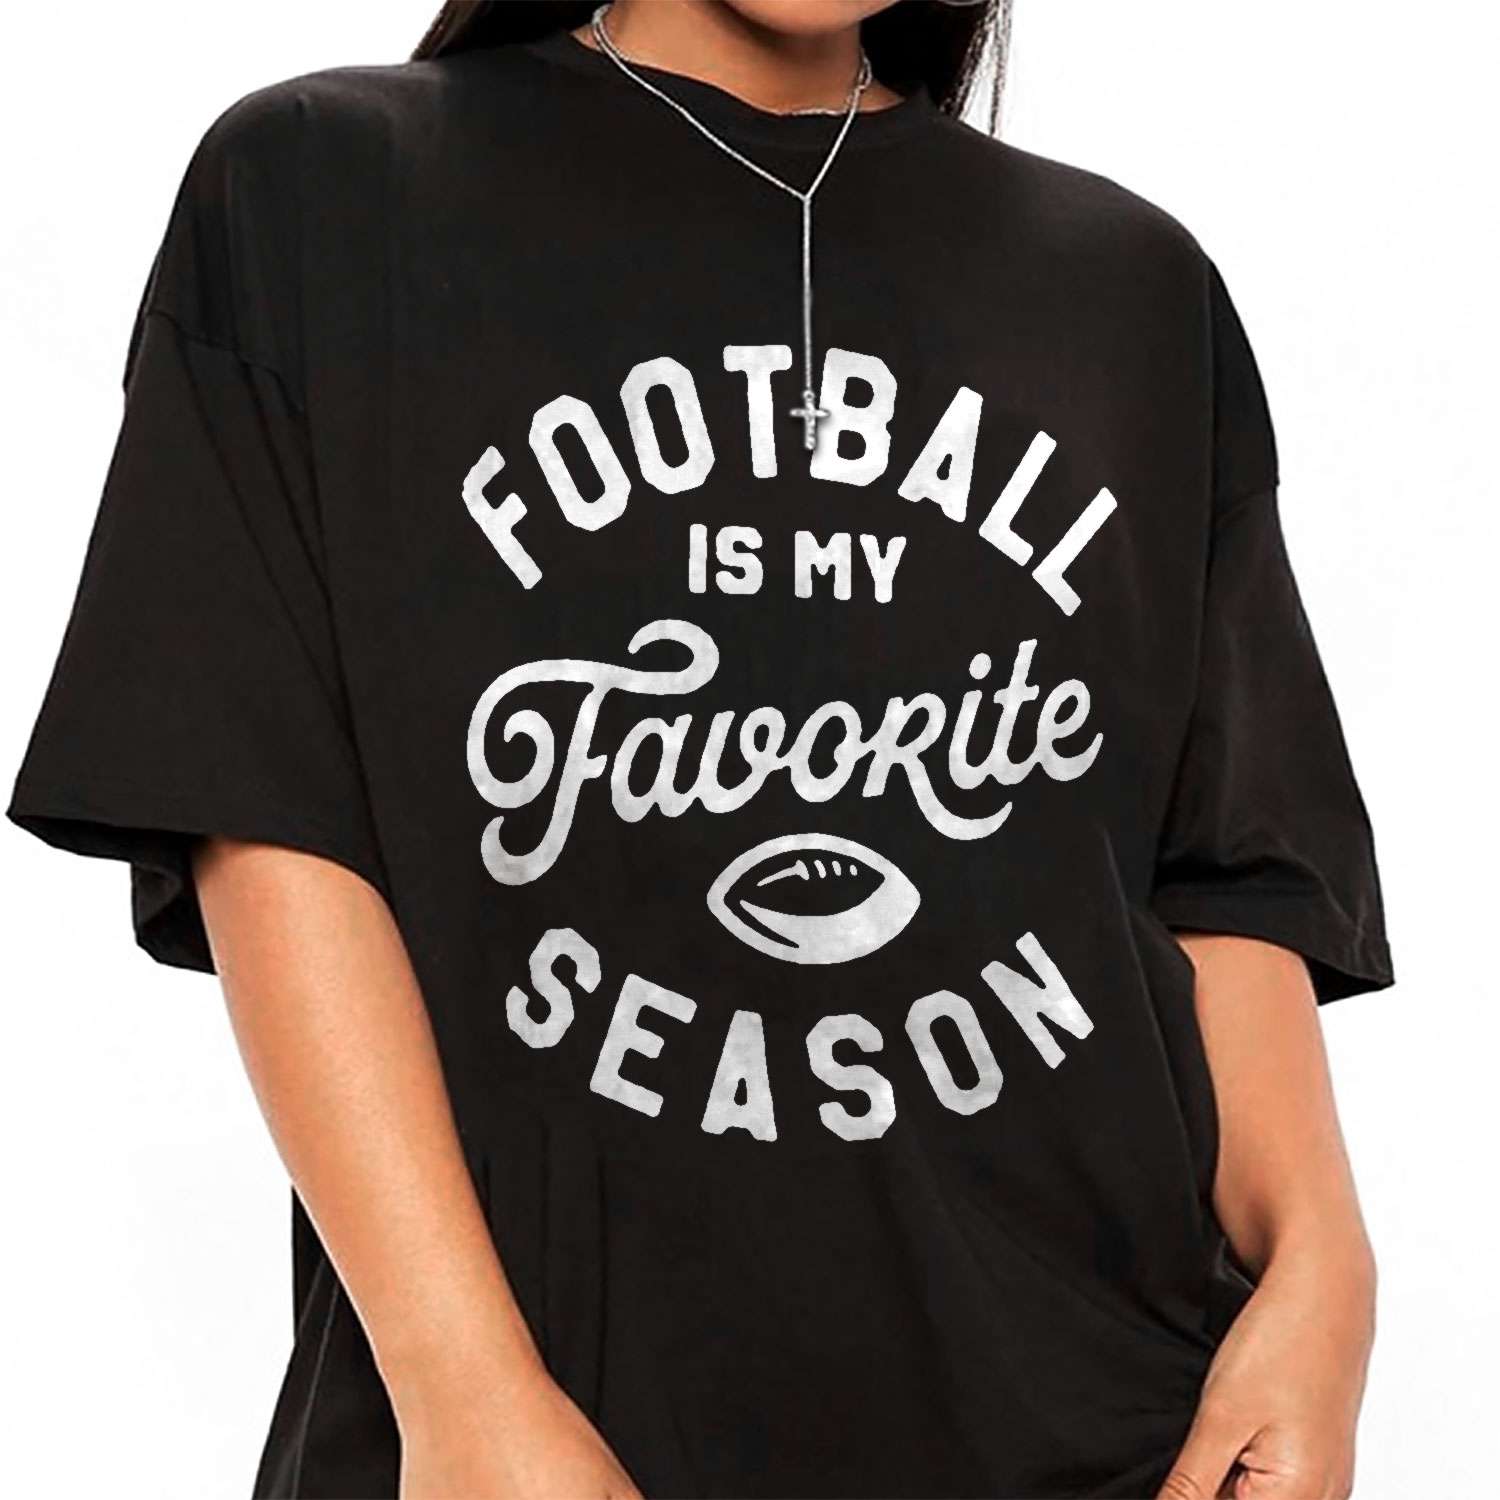 My Favorite Football Season T-shirt